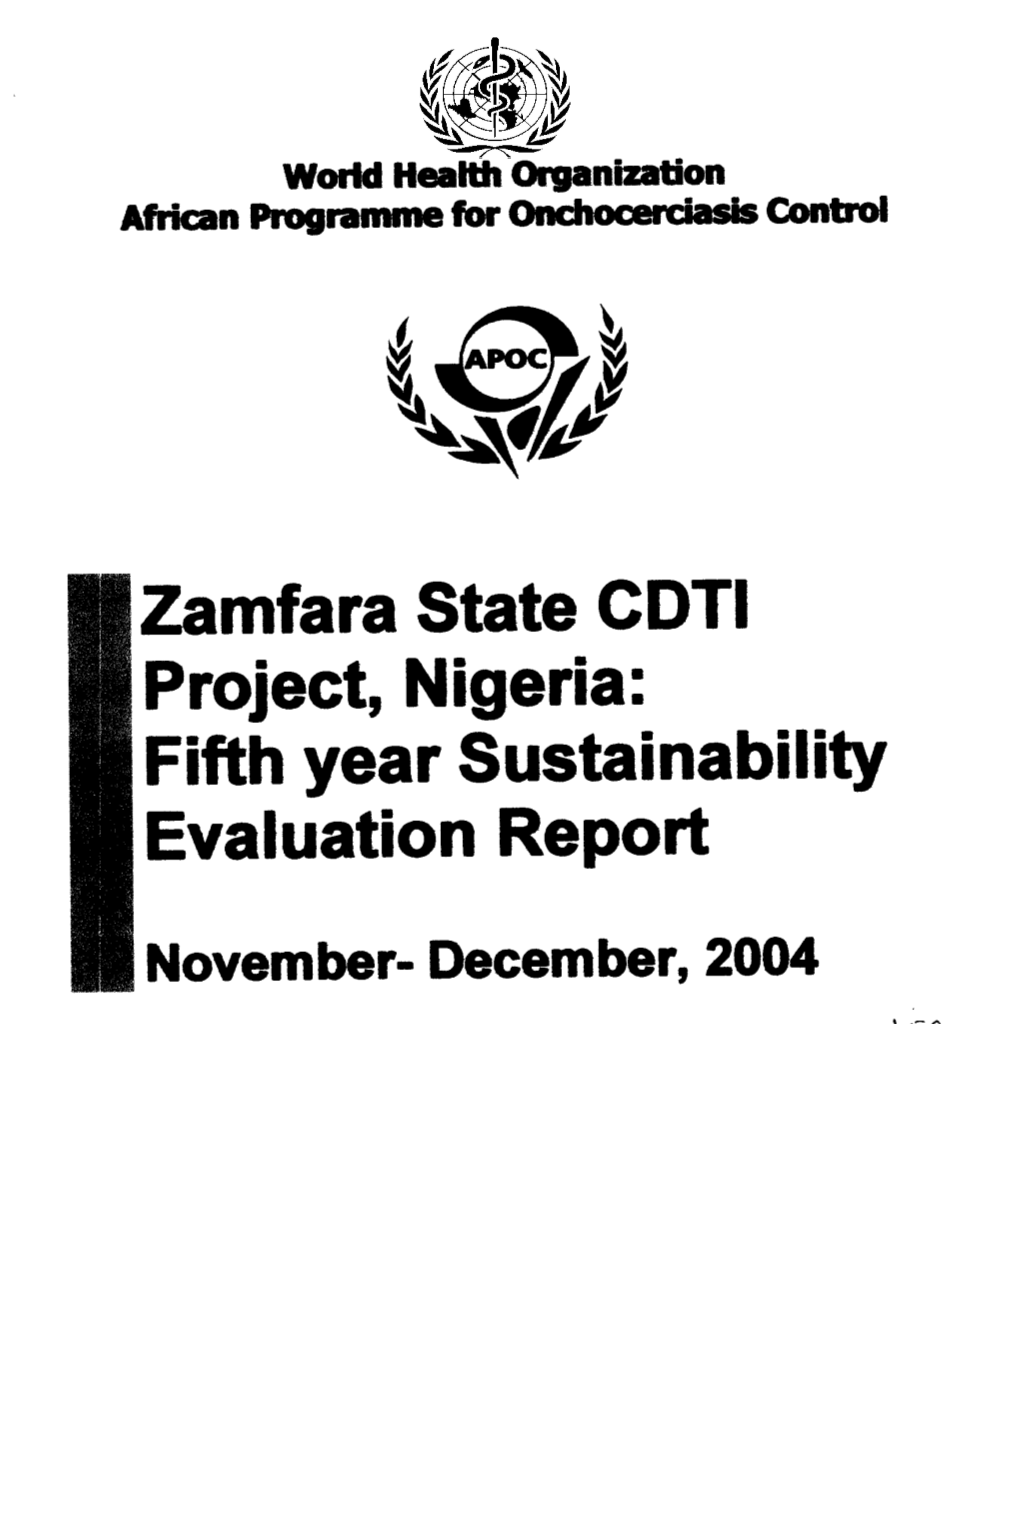 Zamfara State CDTI Project, Nigeria: Fifth Year Sustainability Evaluation Report